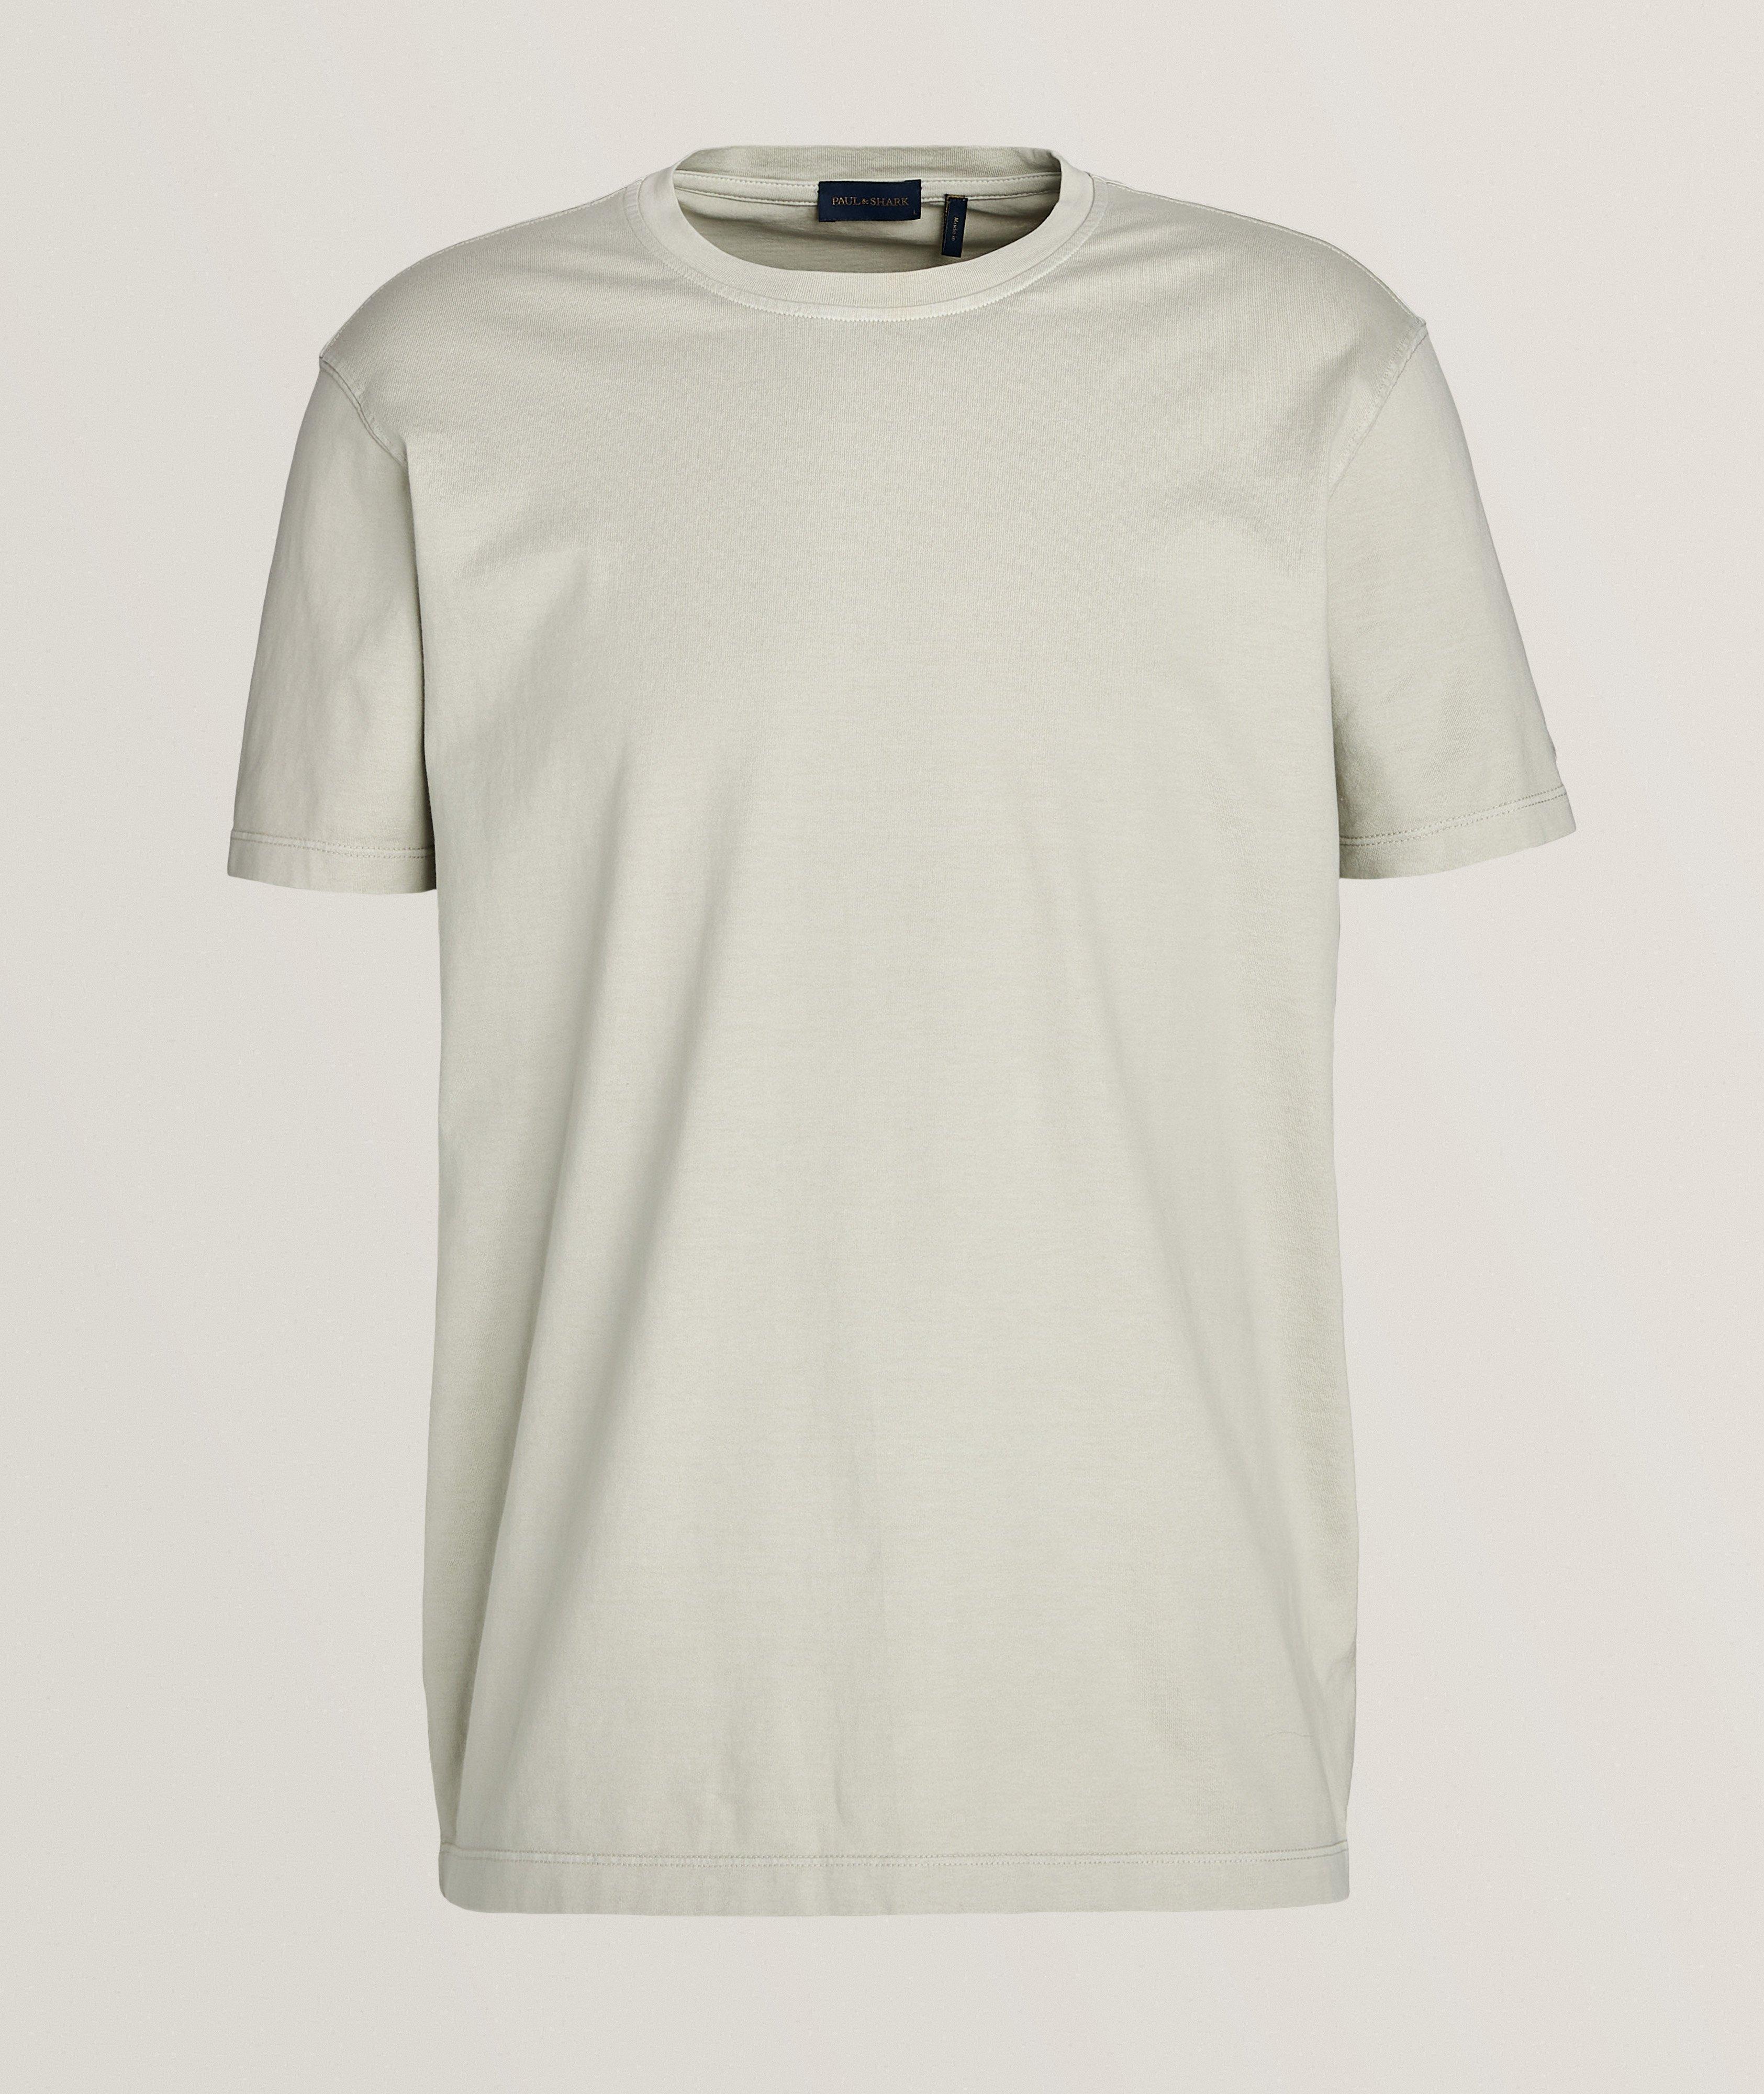 Washed Cotton T-Shirt image 0